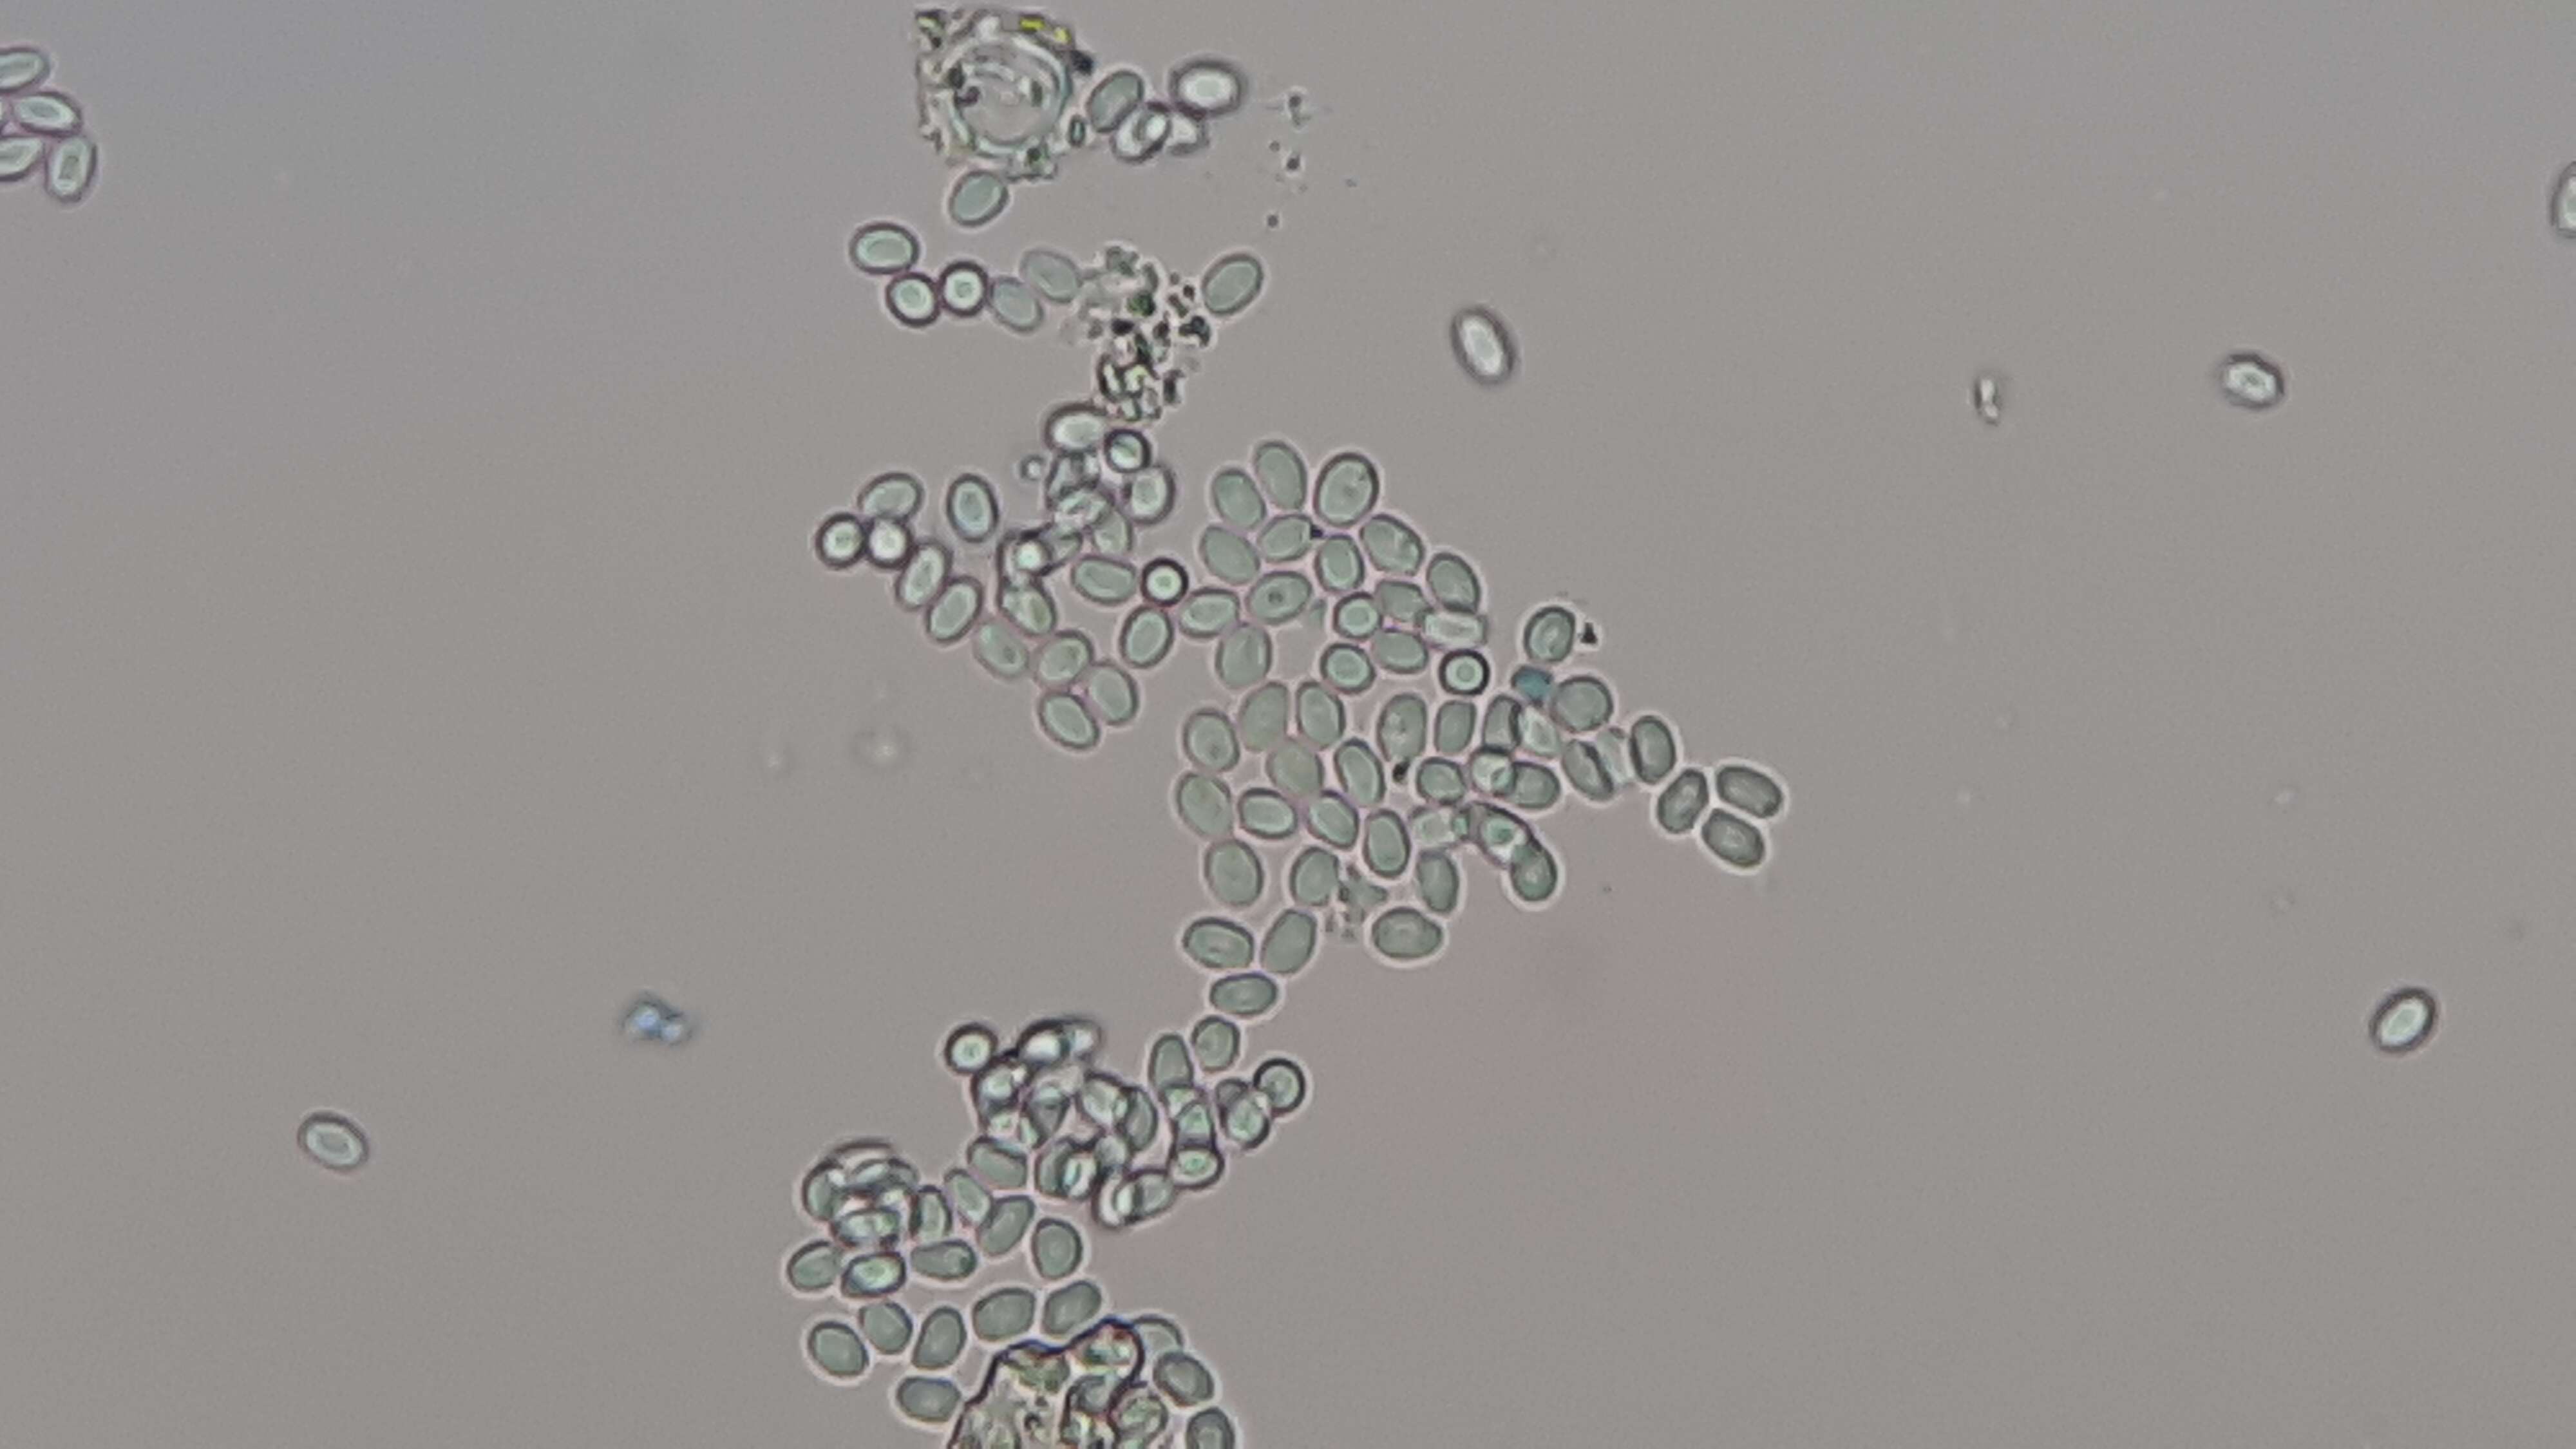 Imagem de unclassified Saccharomycetales